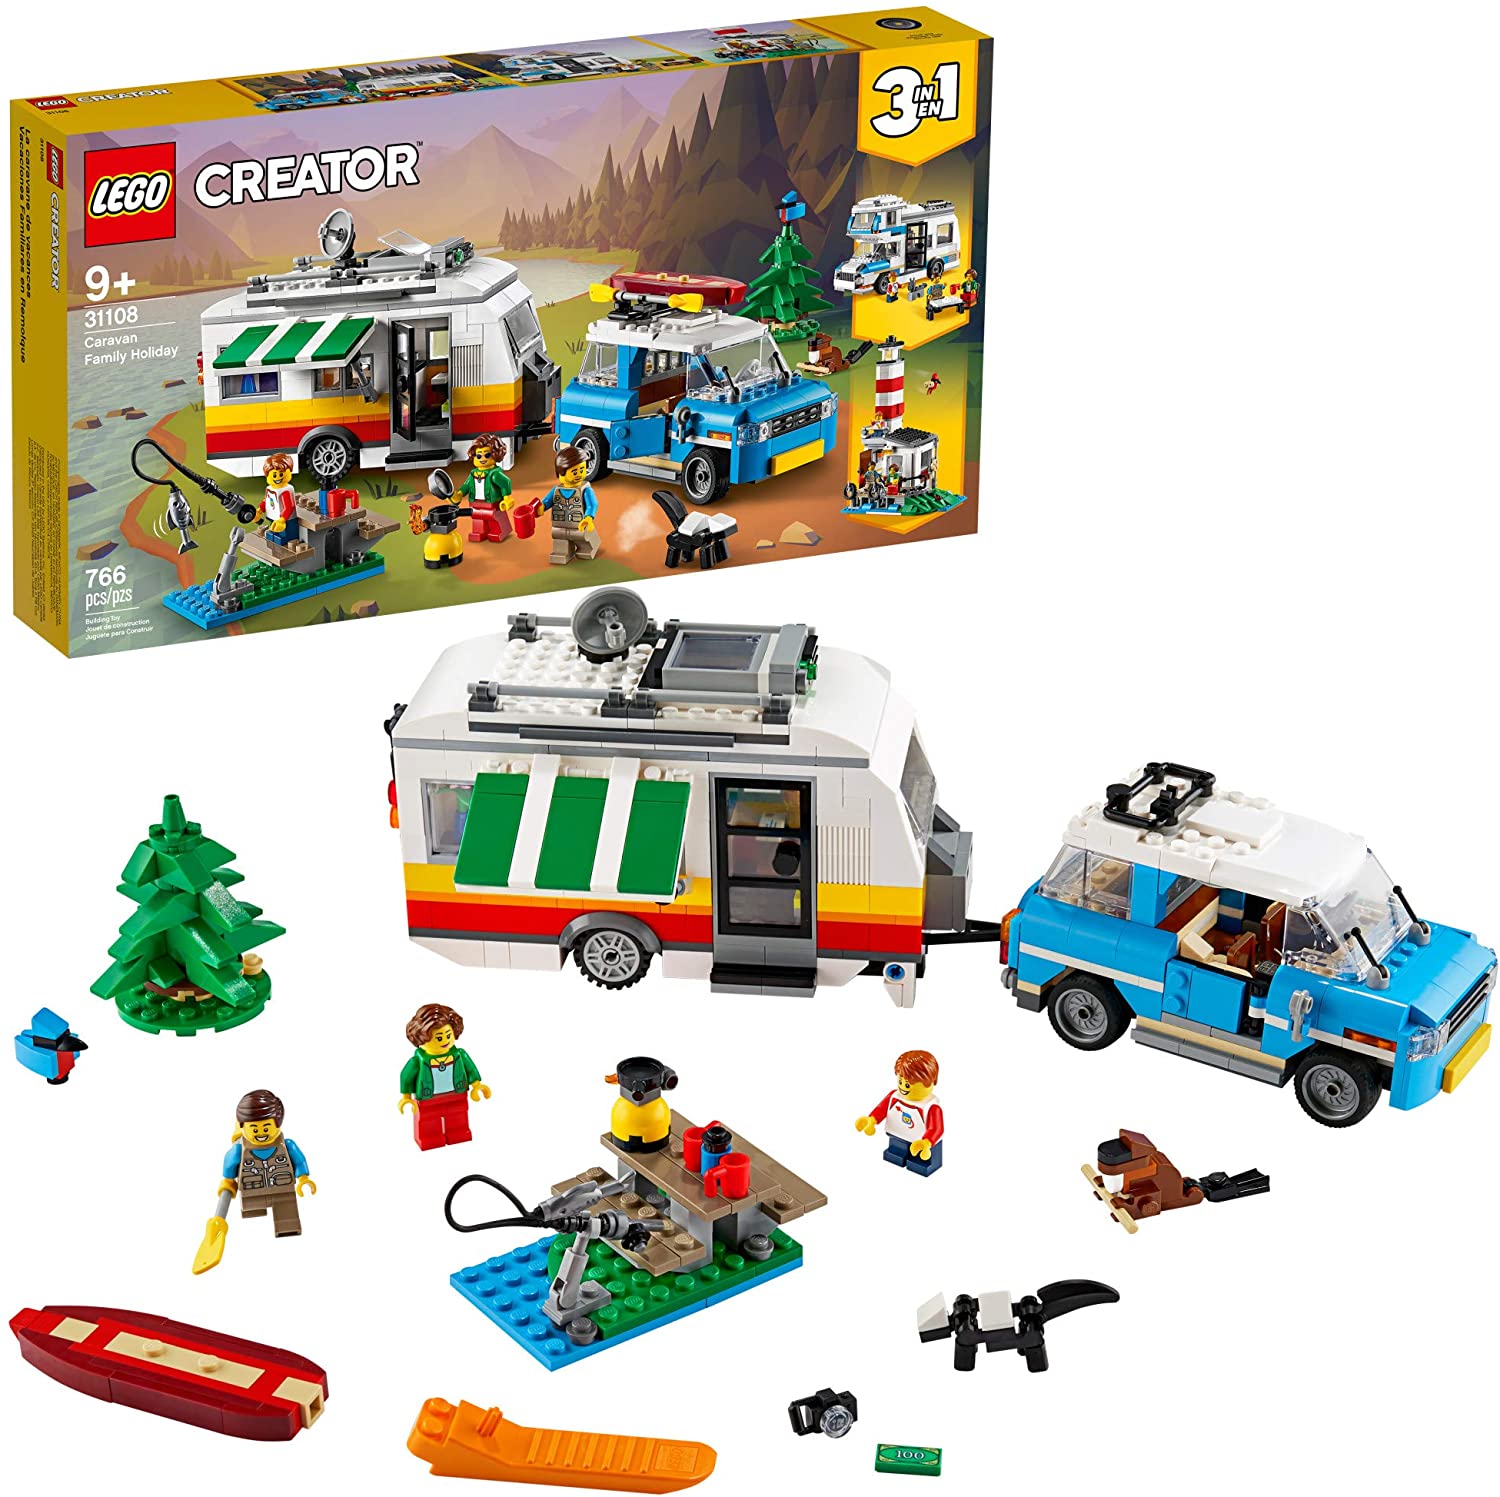 766-Piece LEGO Creator 3in1 Caravan Family Holiday Creative Building Toy Set (31108) $56